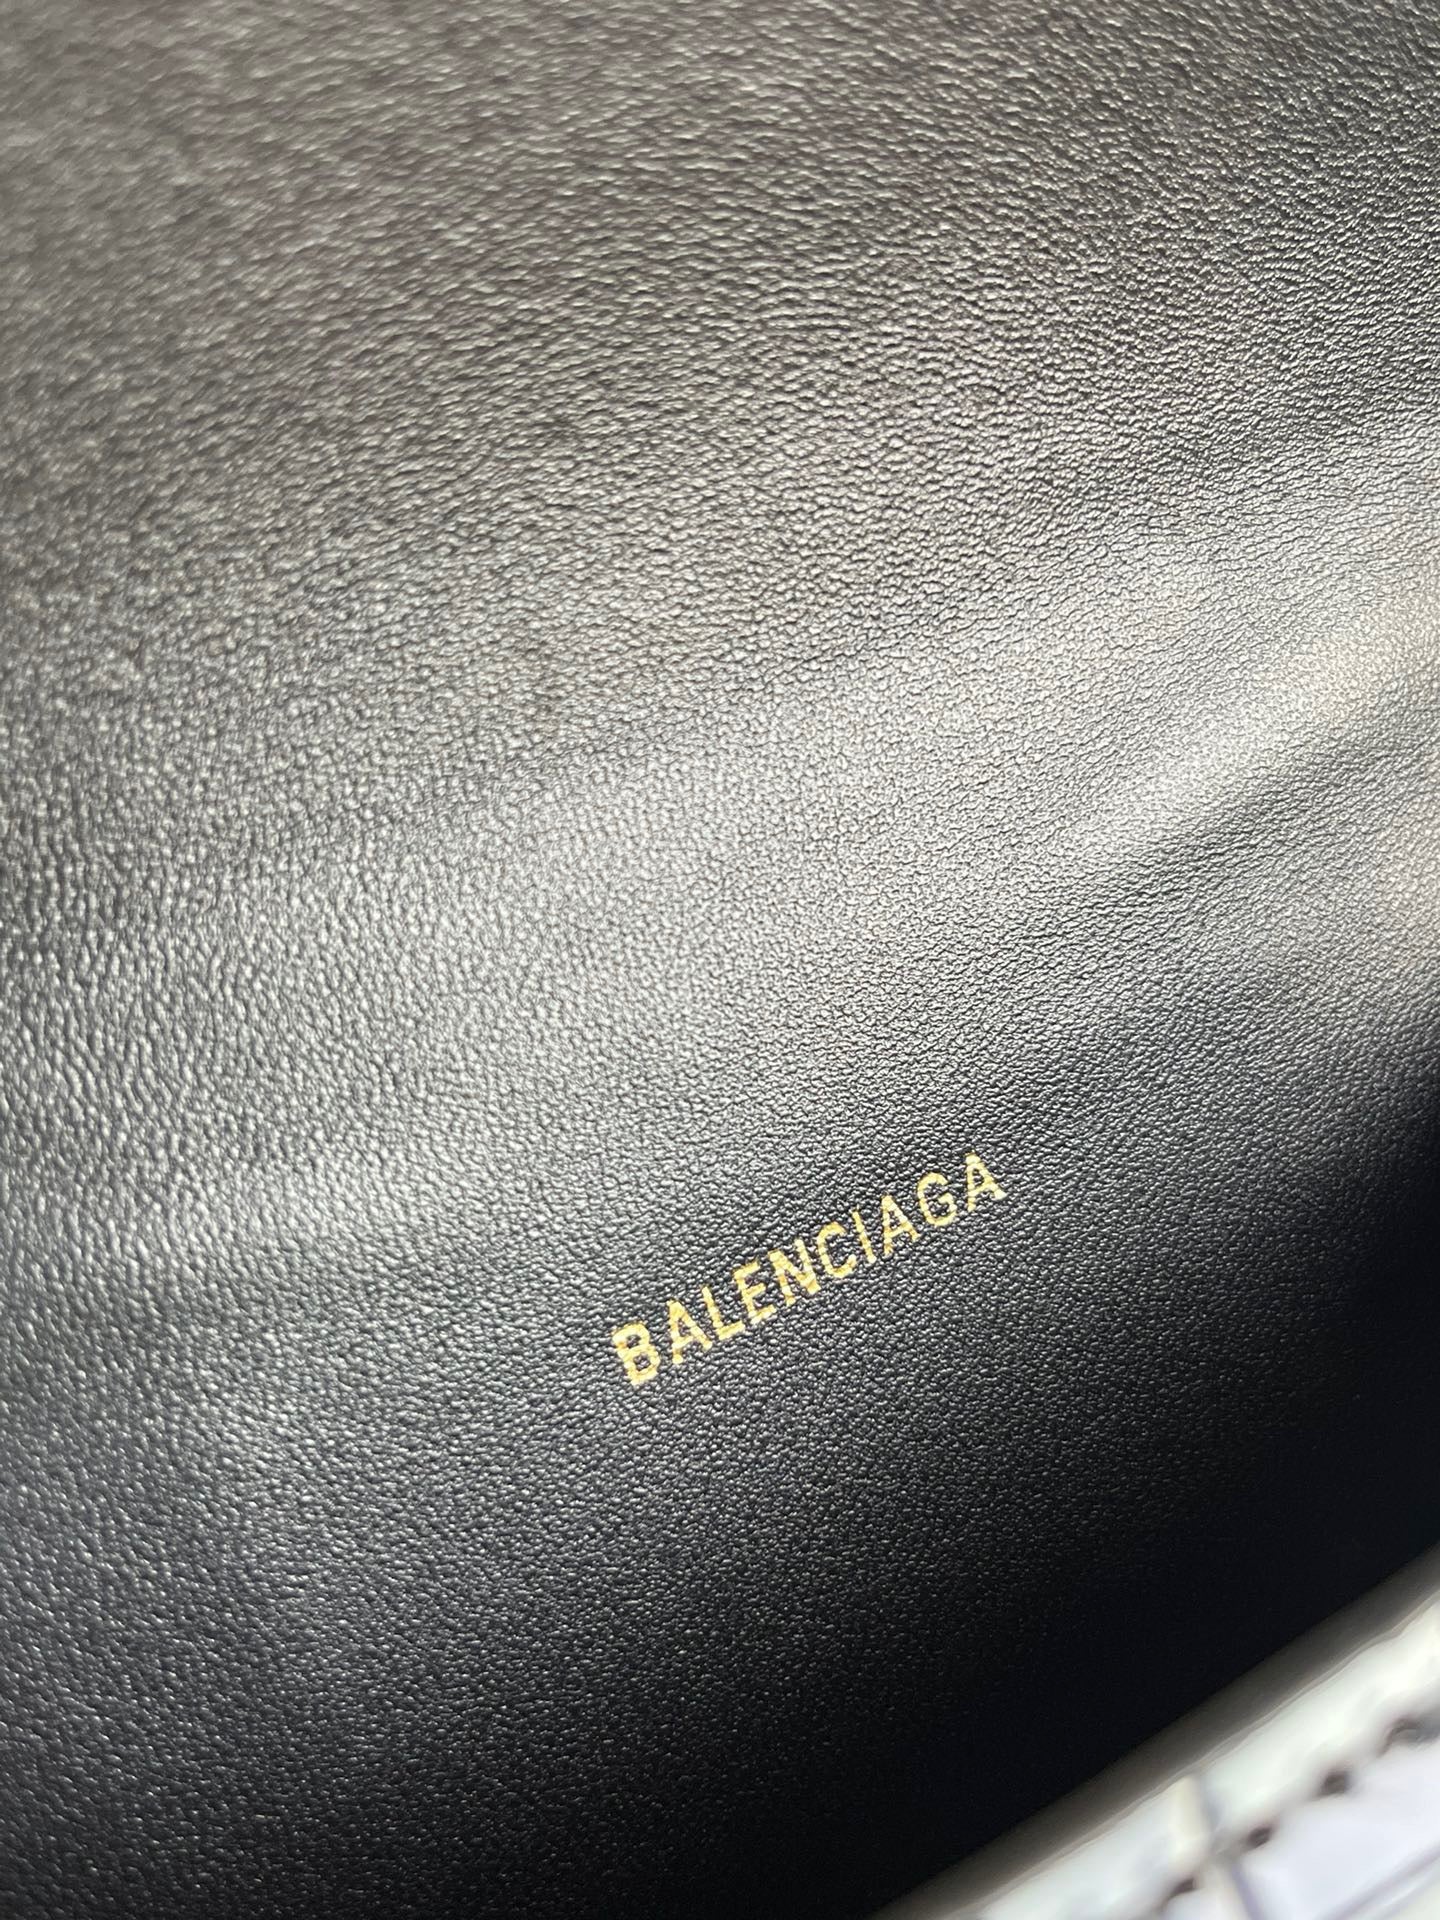 Balenciaga Hourglass Bag Black Gold Buckle